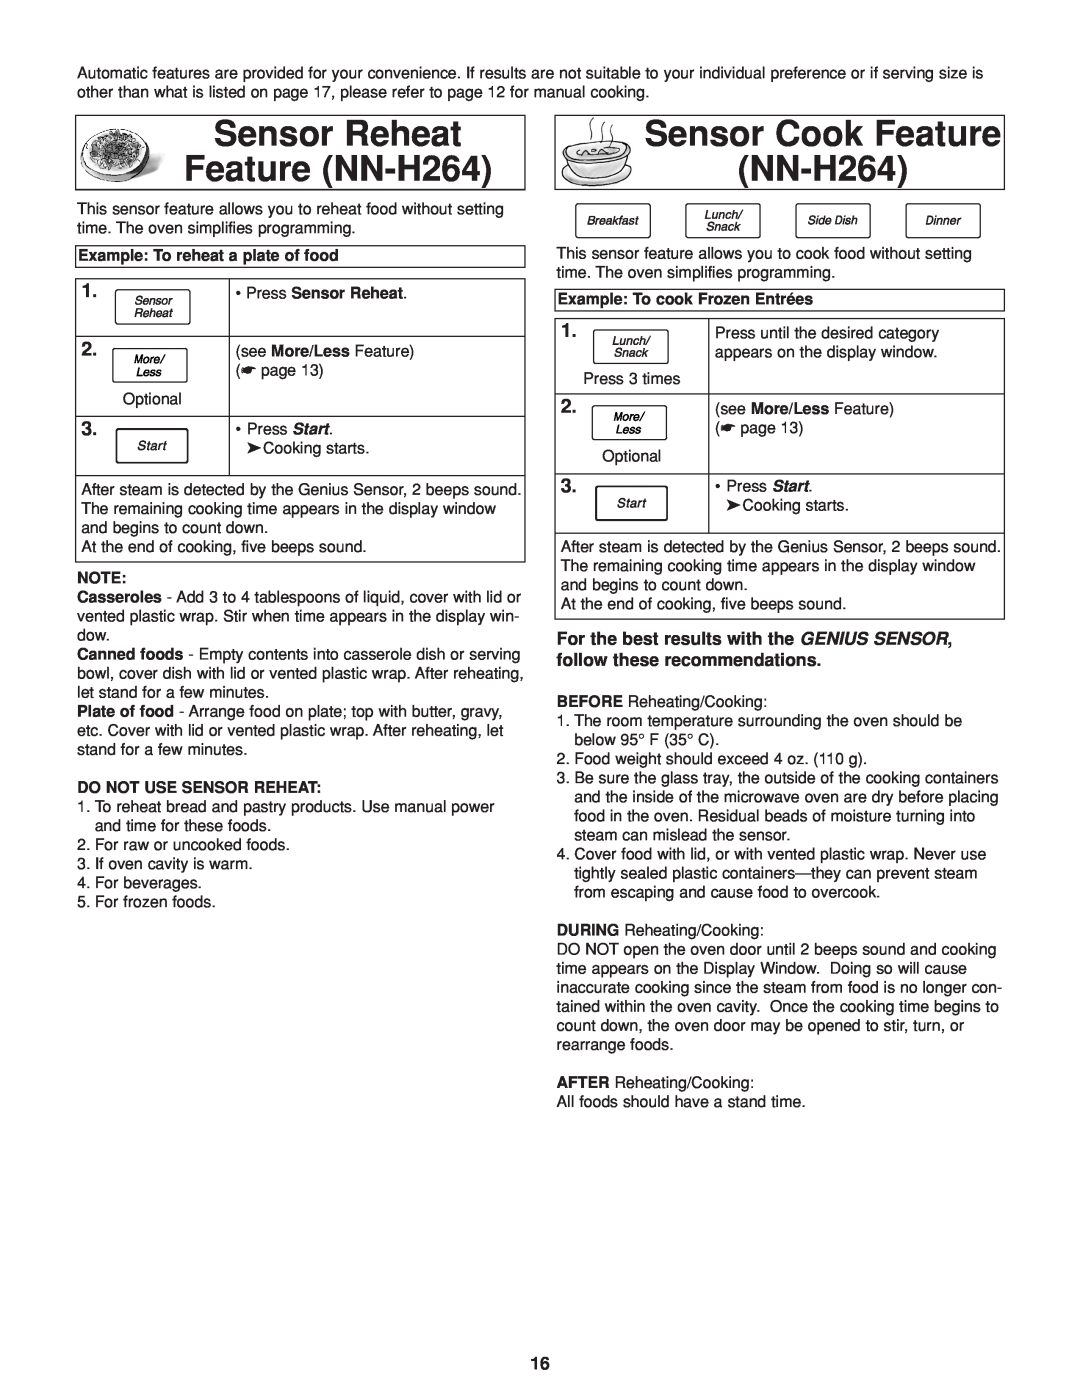 Panasonic important safety instructions Sensor Reheat Feature NN-H264, Sensor Cook Feature NN-H264 